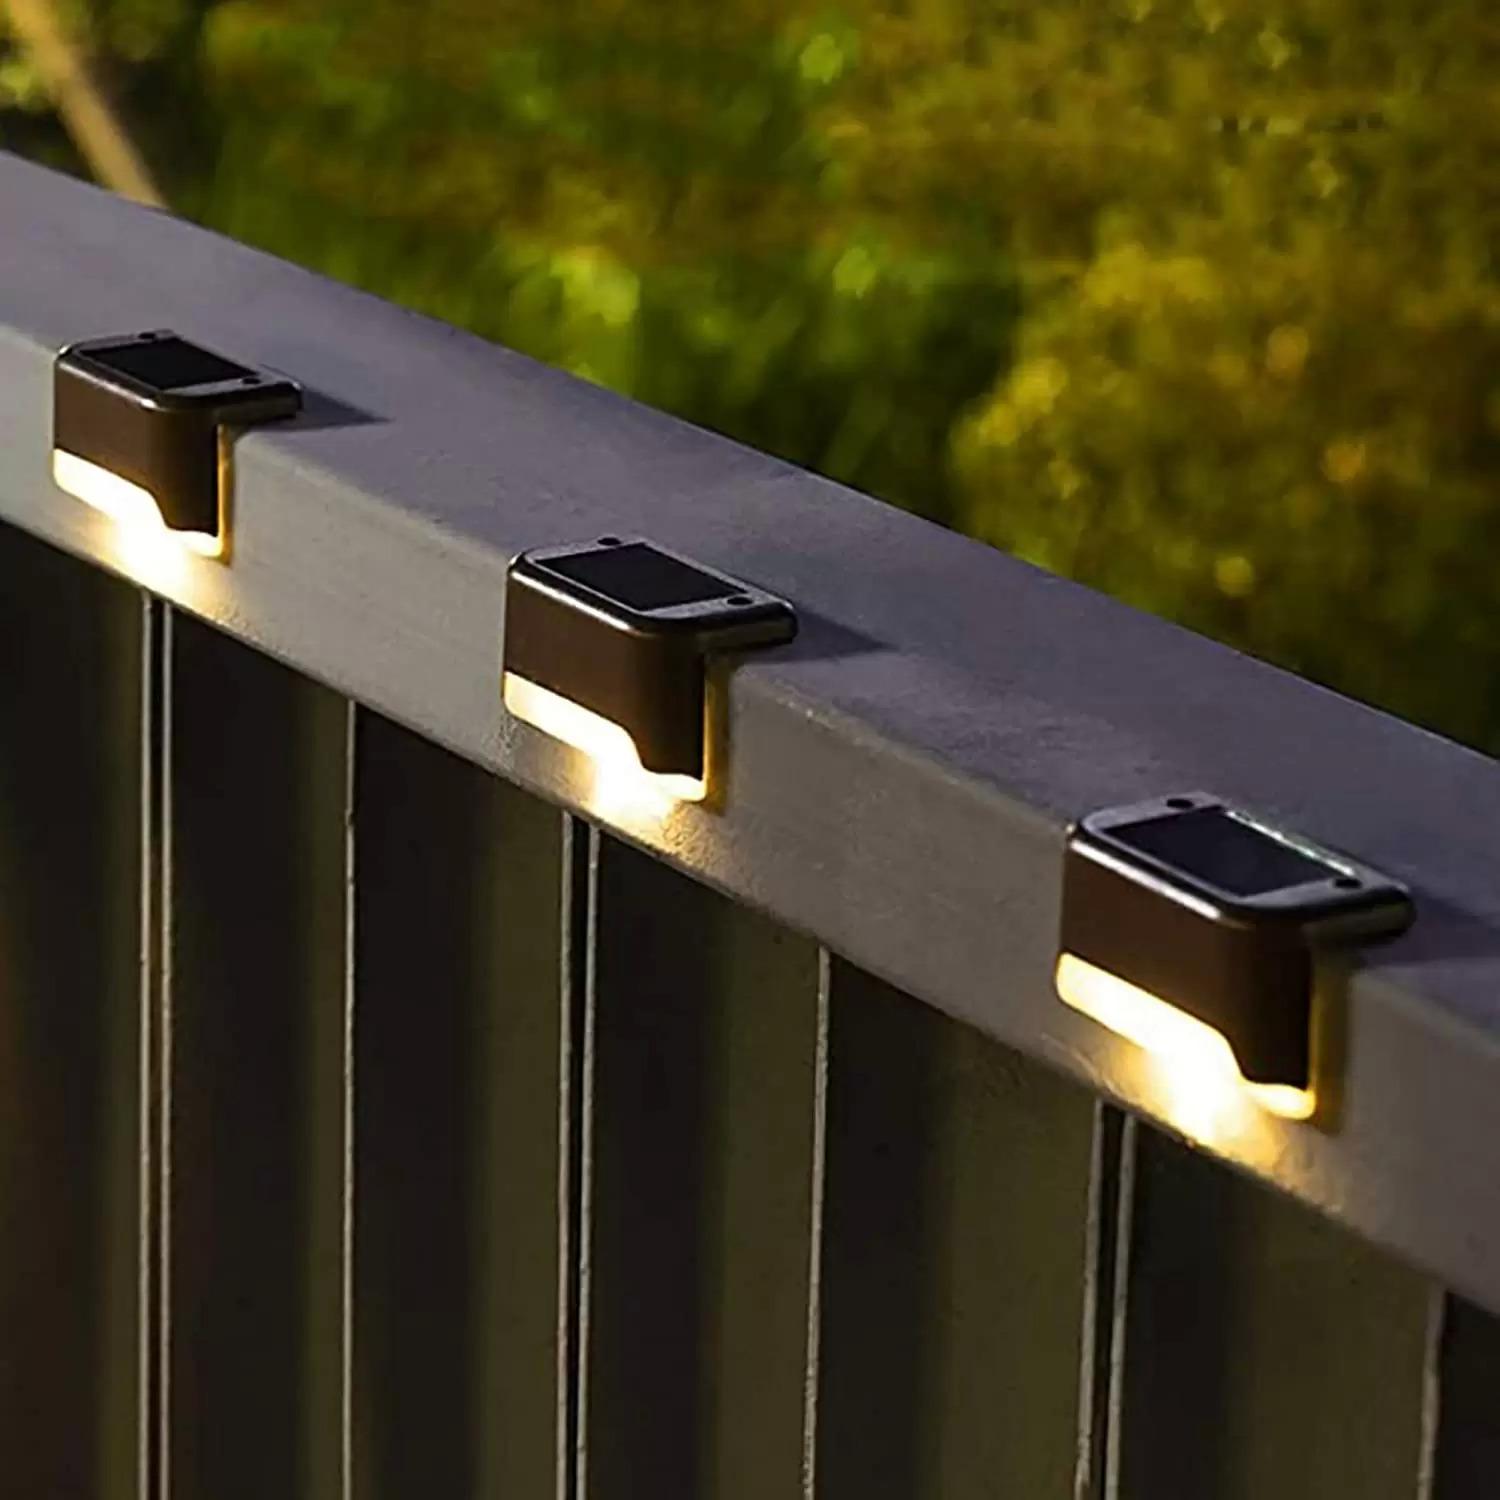 16 Hakol Solar Waterproof LED Deck Lights for $19.99